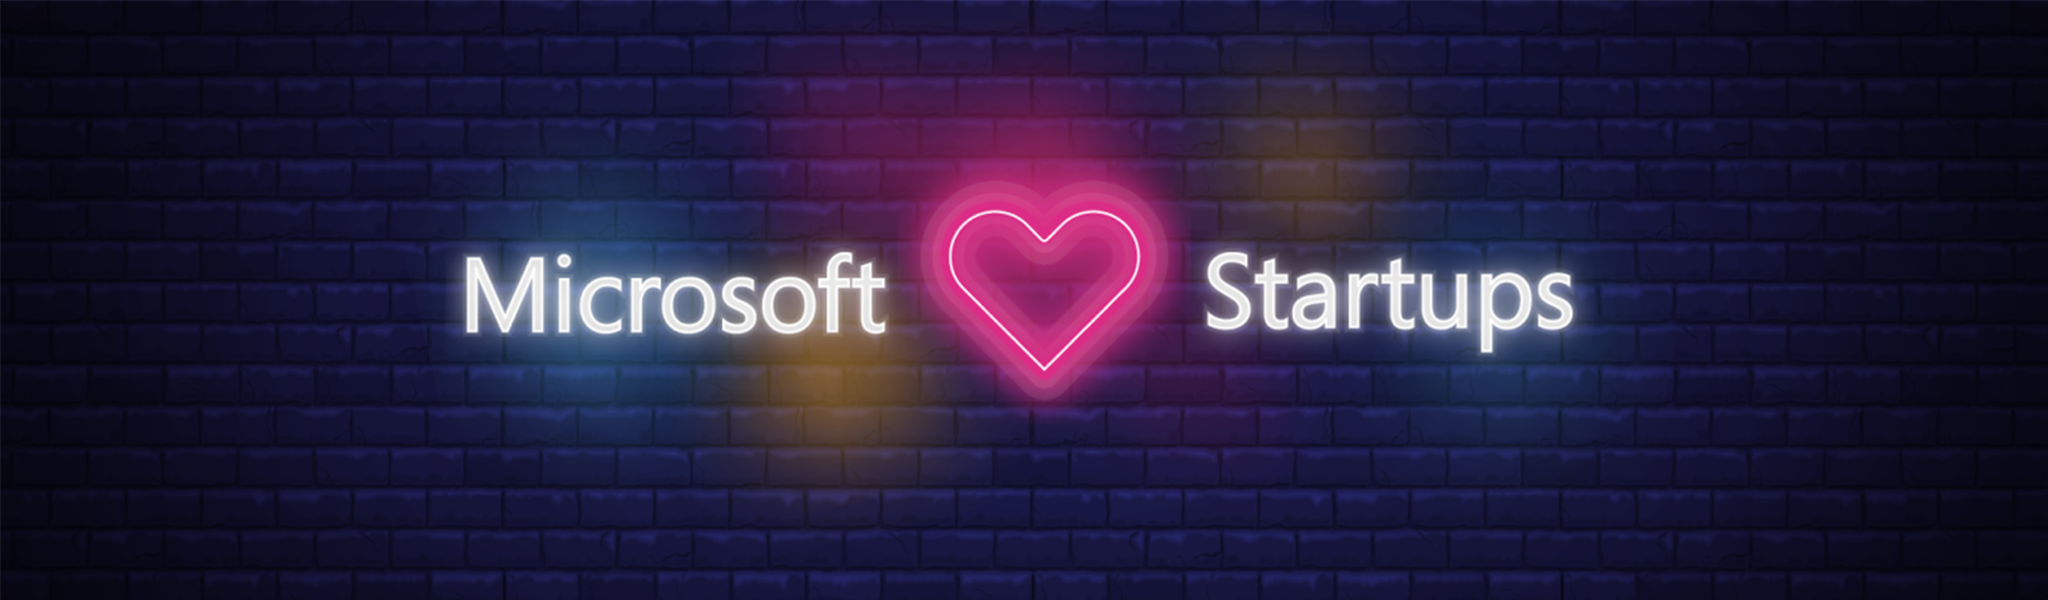 Microsoft aime Startups